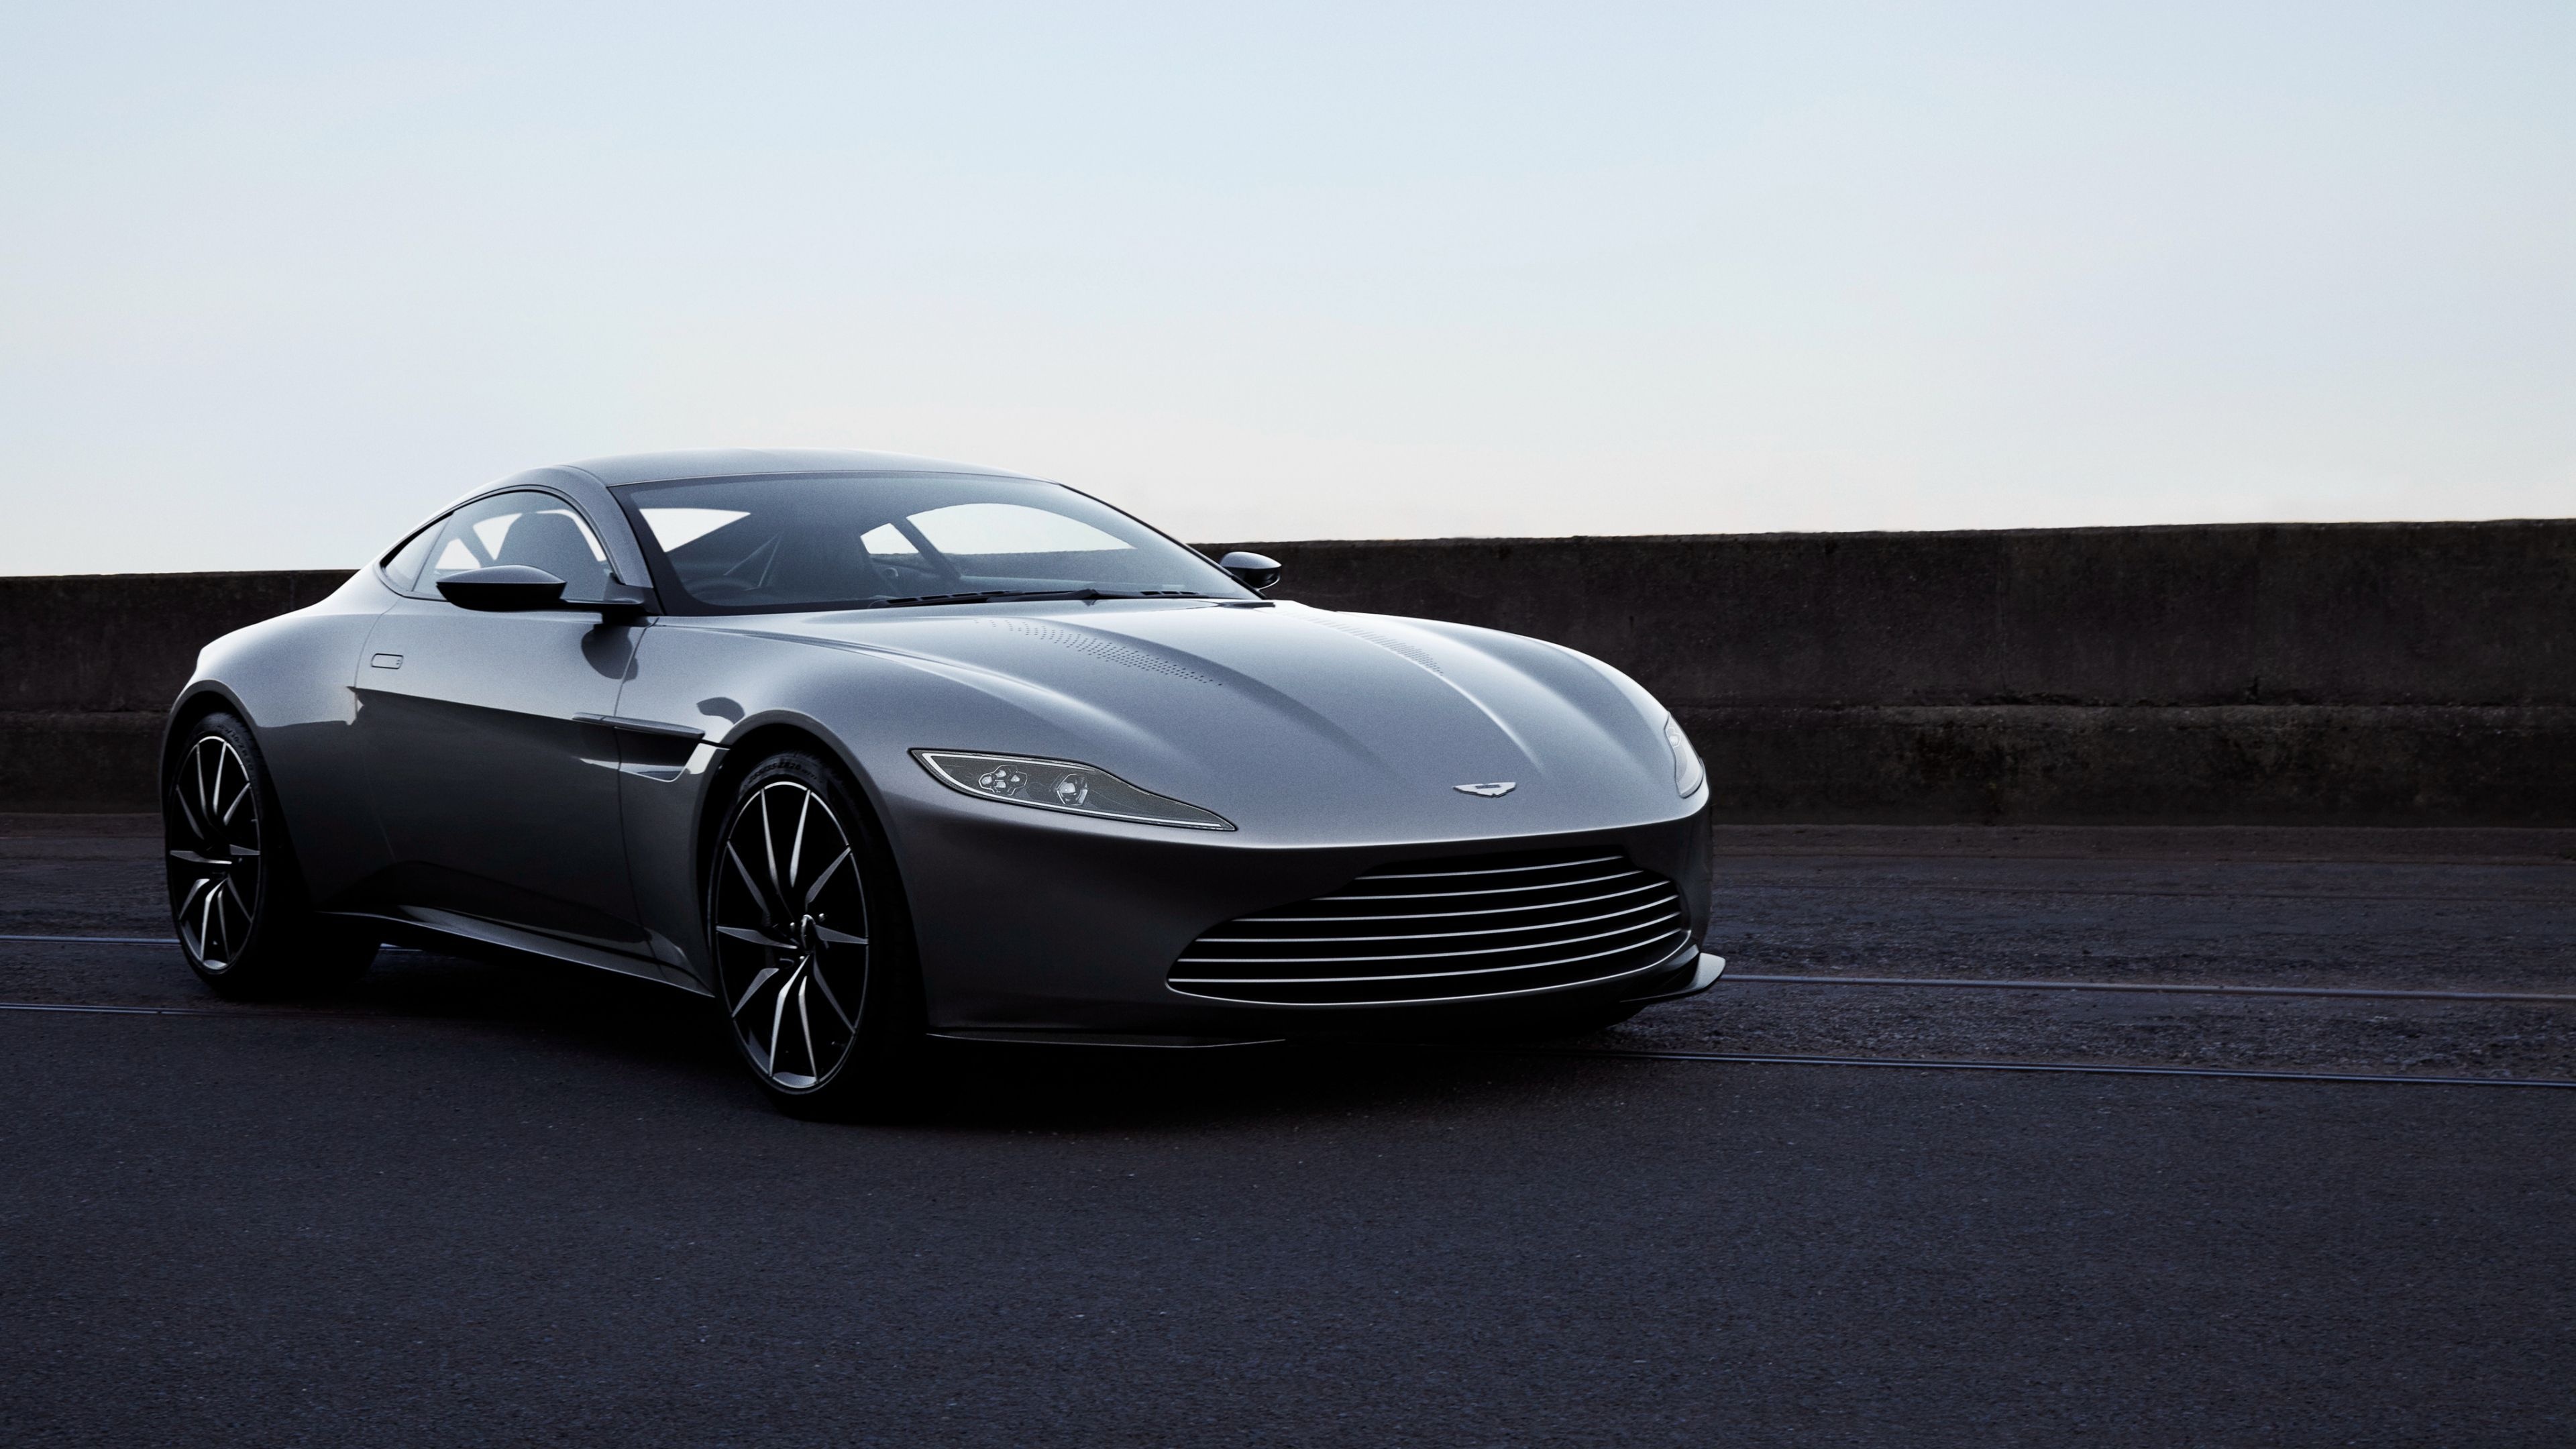 Aston Martin DB11, Auto luxury, Supercar revs, Sleek design, 3840x2160 4K Desktop